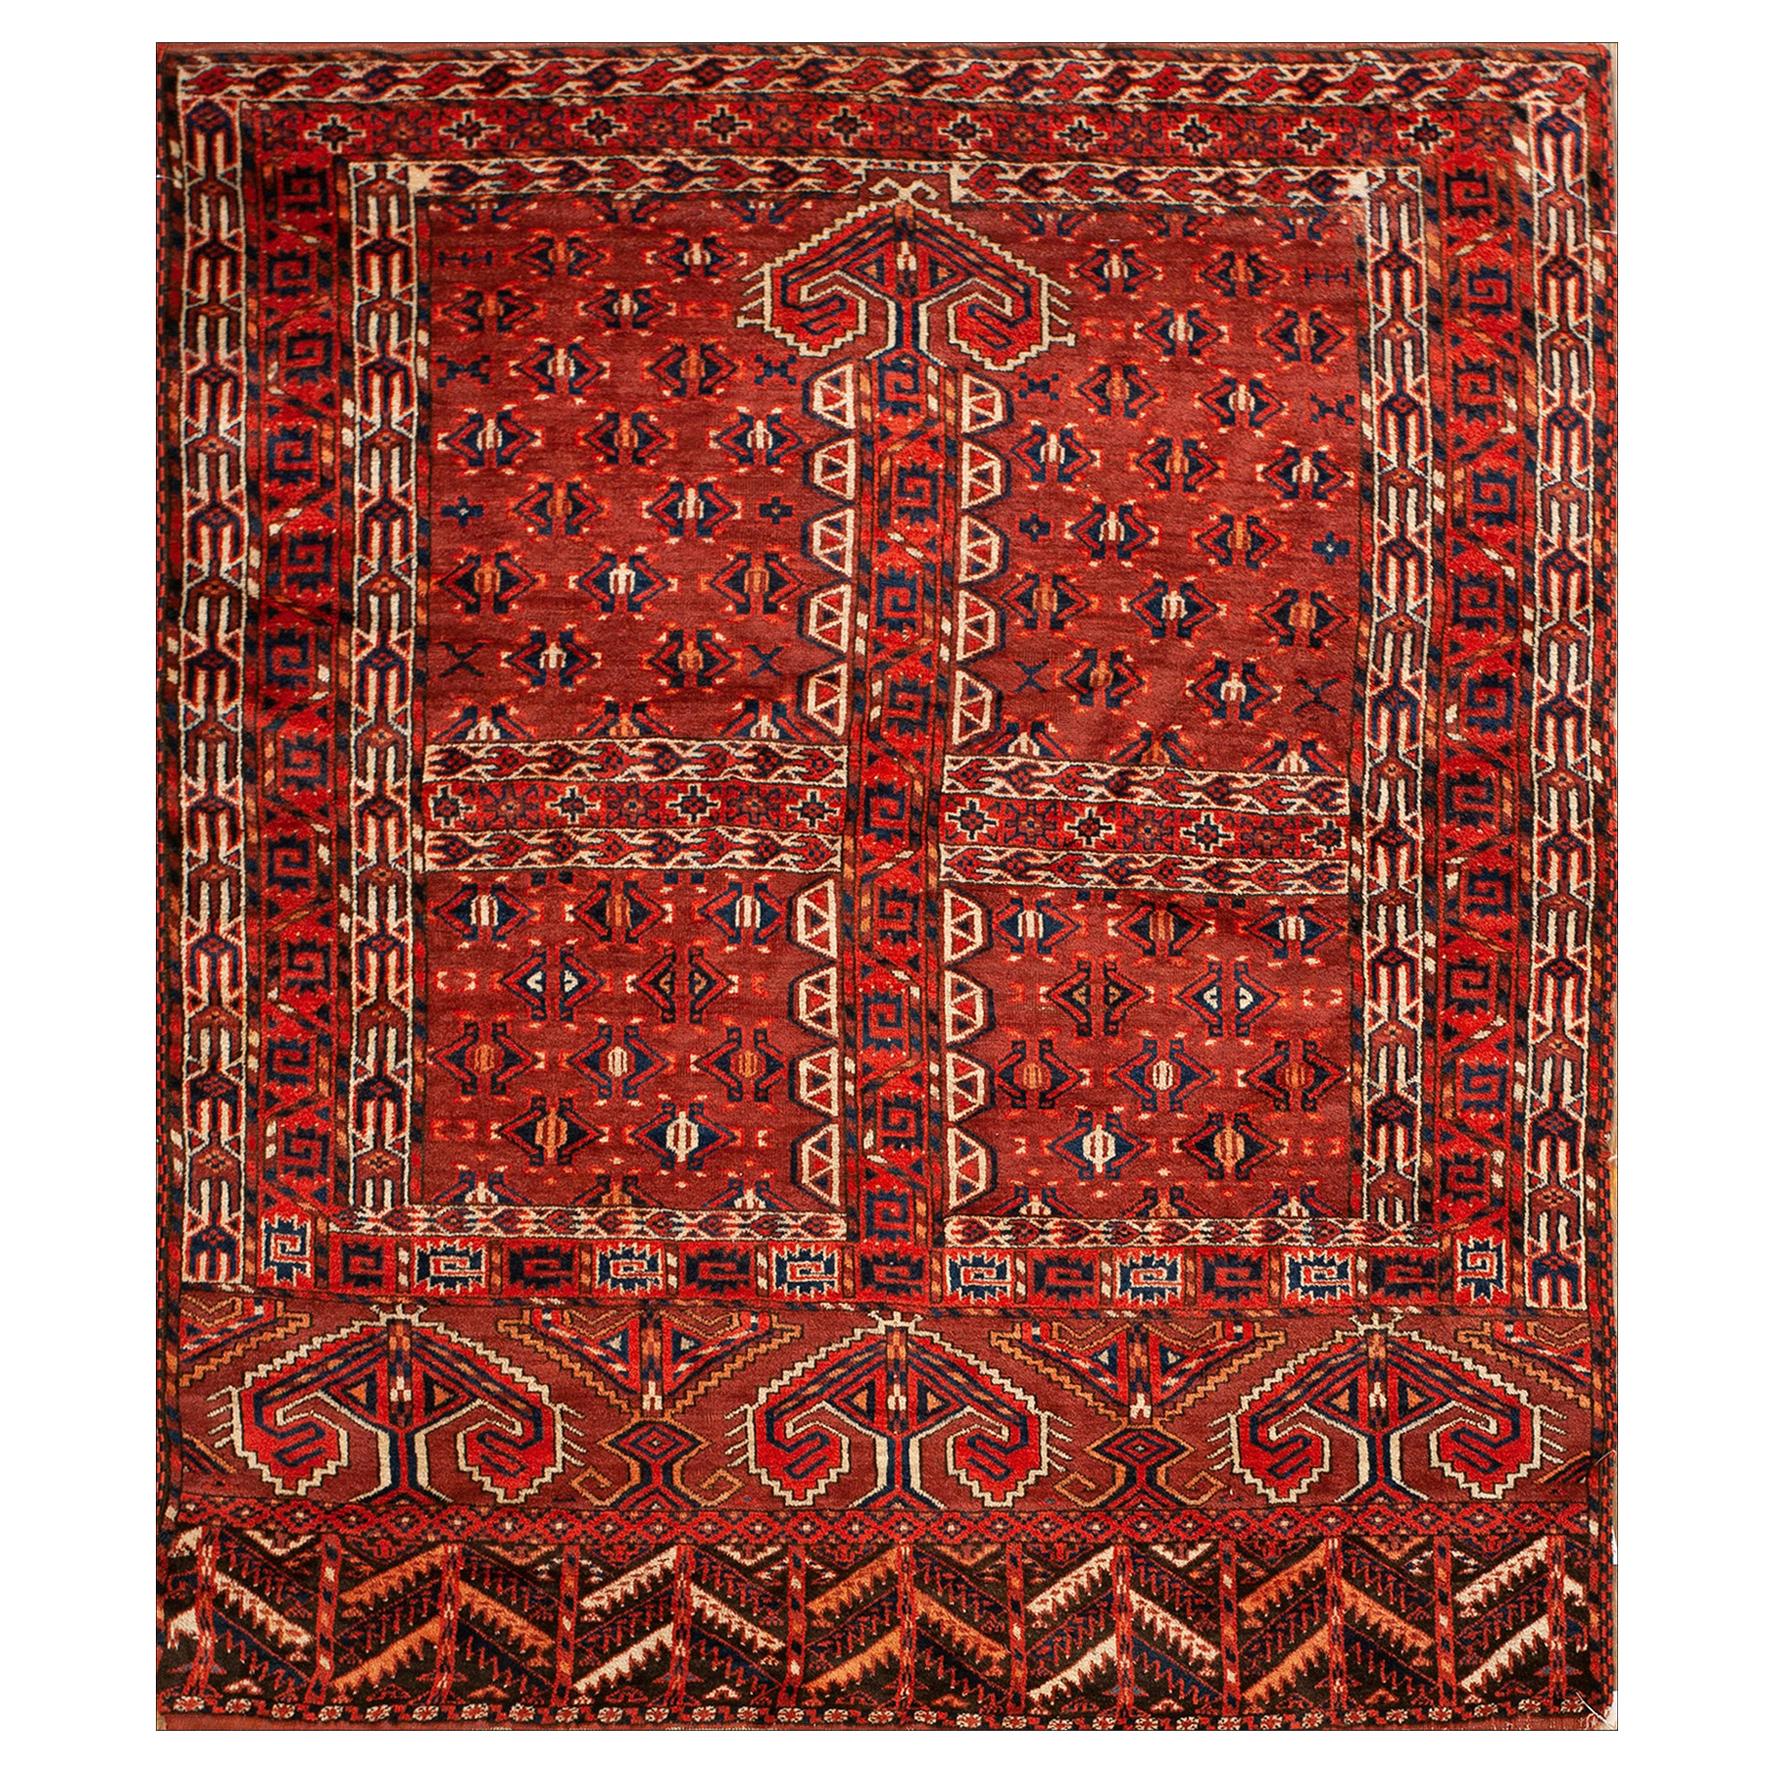 19th Century Turkmen Engsi Carpet ( 4 7" x 5'2" - 140 x 157 )